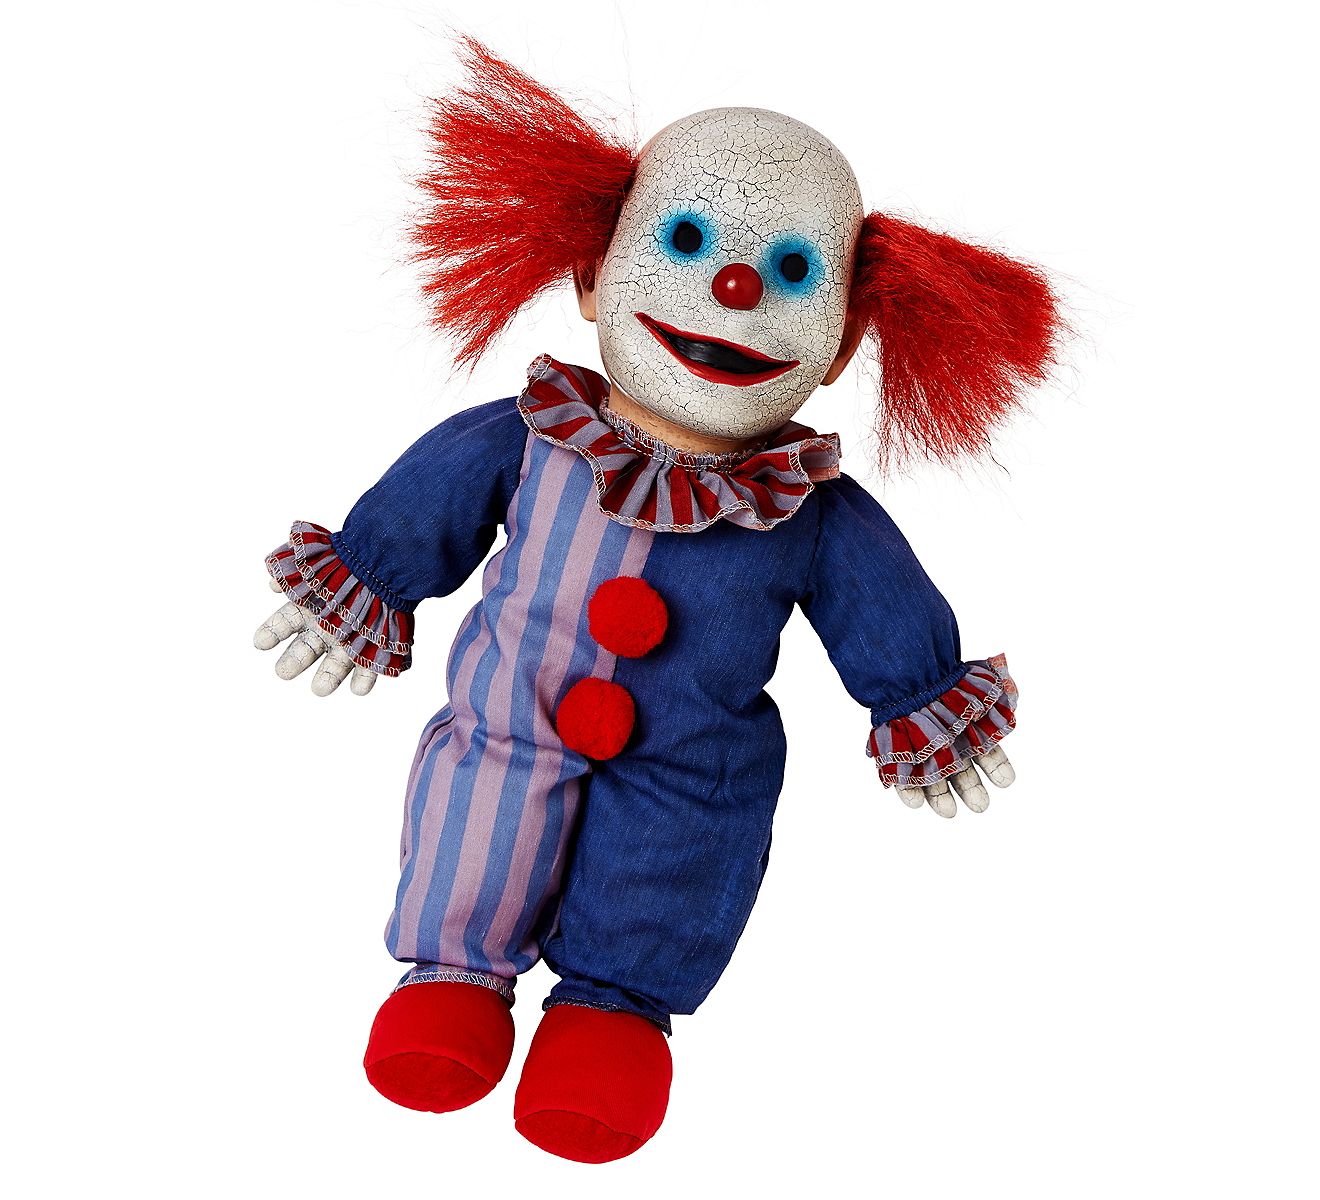 creepy clown dolls for sale